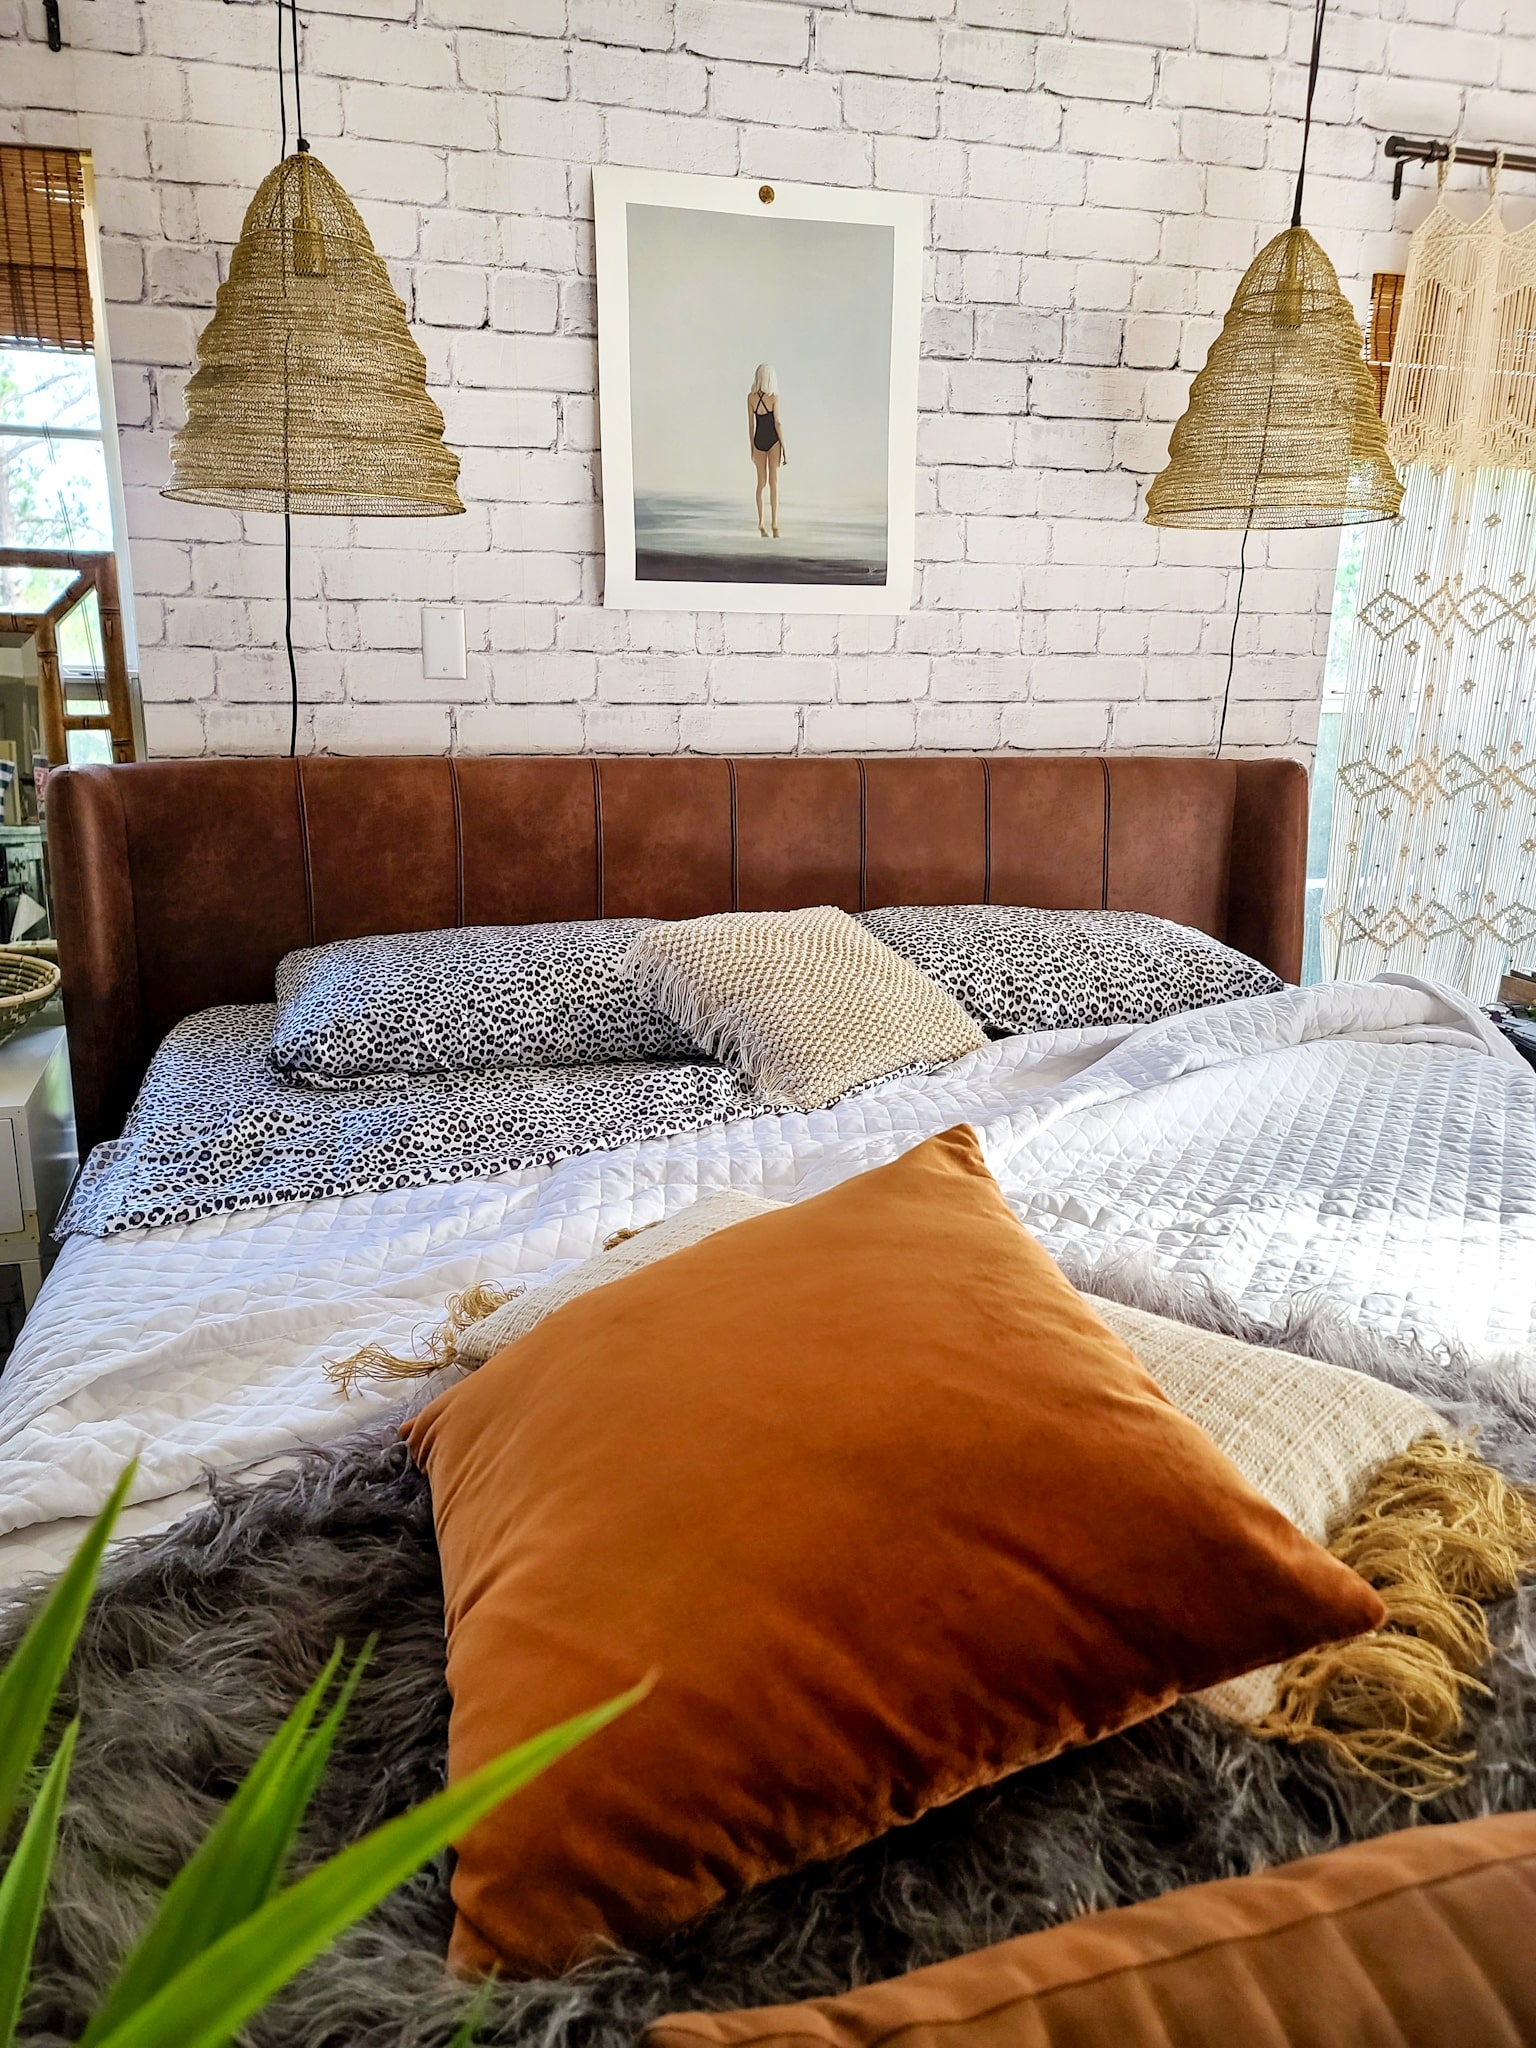 Creatice Industrial Boho Bedroom with Simple Decor